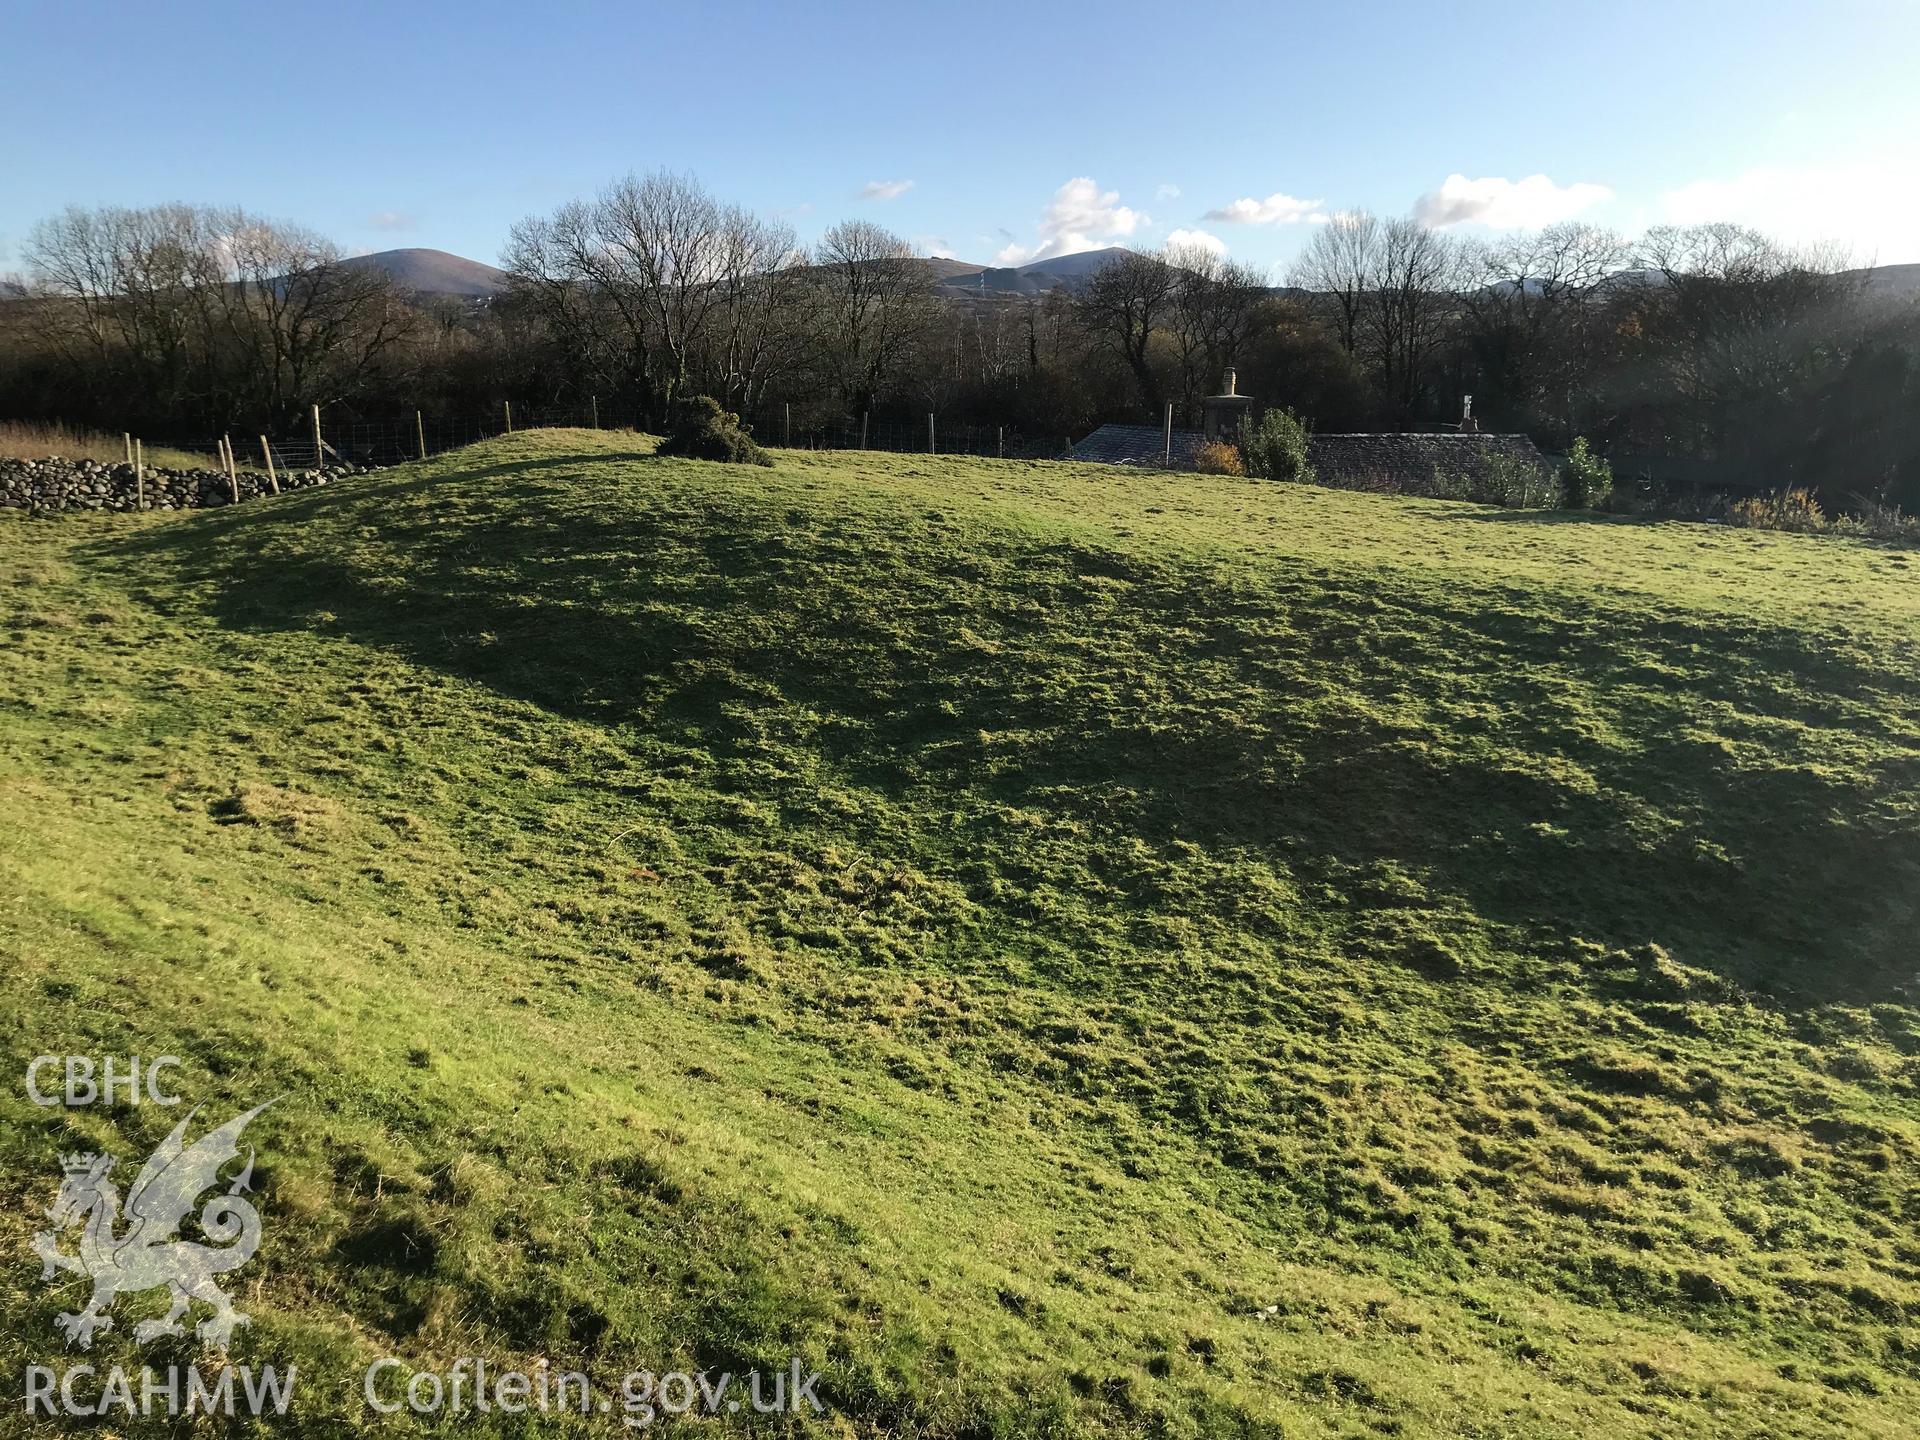 Digital colour photograph showing Hen Gastell homestead, Llanwnda, taken by Paul Davis on 3rd December 2019.